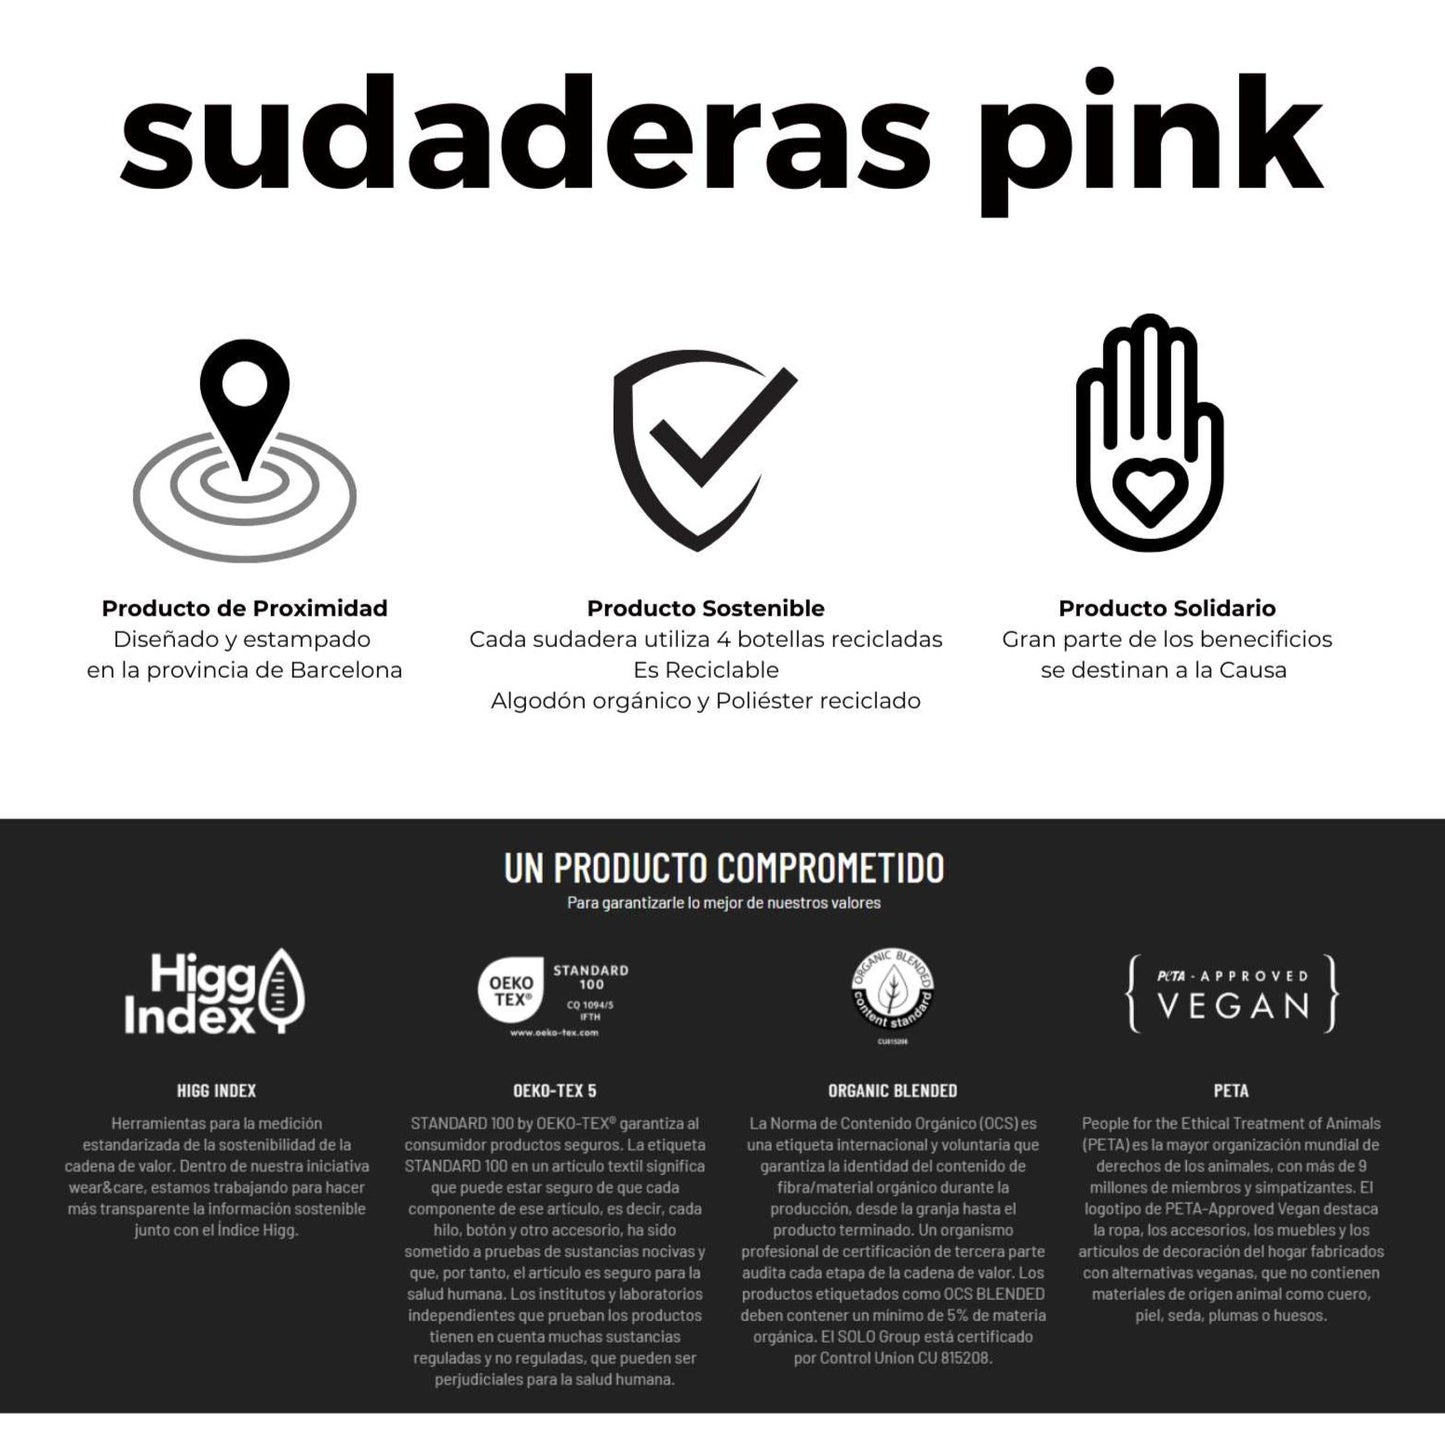 Sudadera Classic Pink Portres